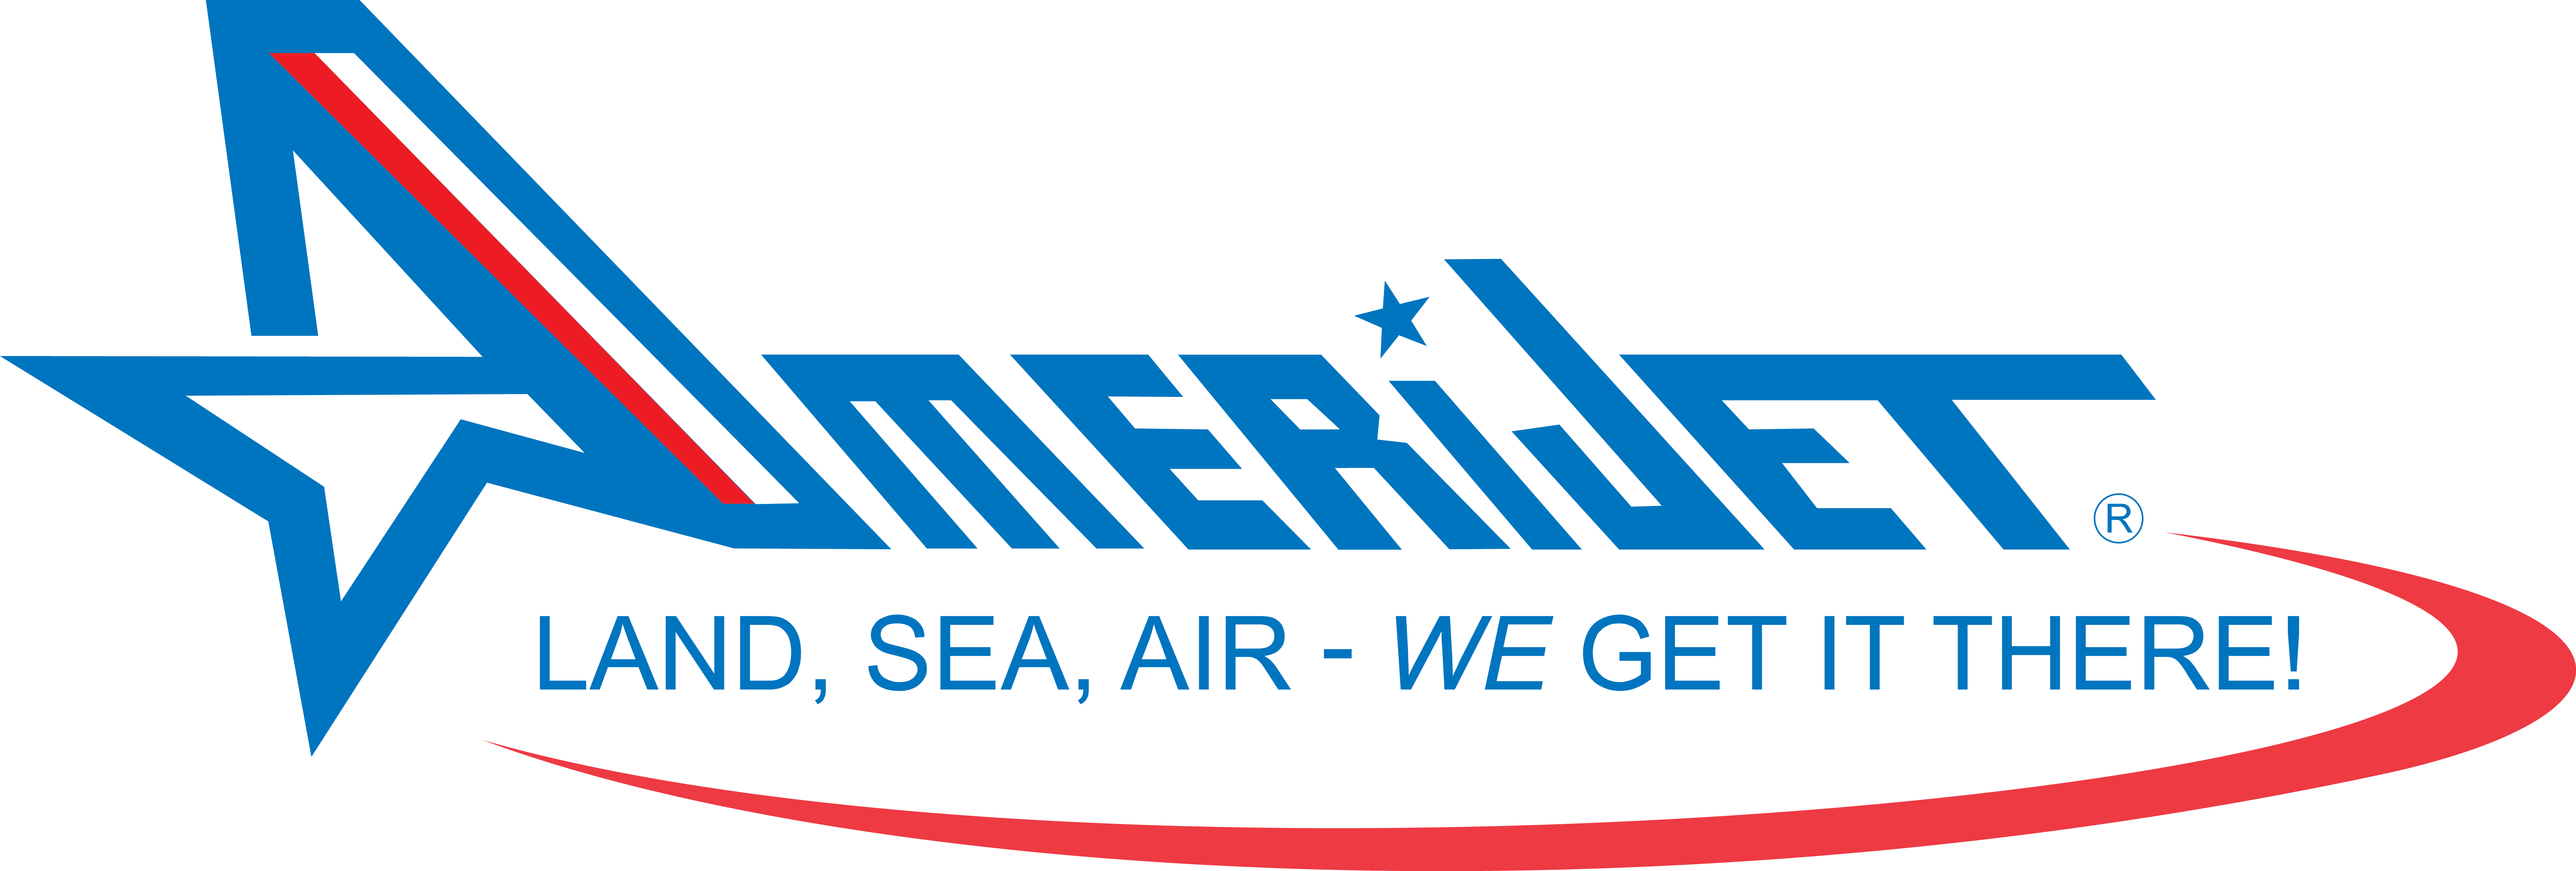 Amerijet Company Logo - Official